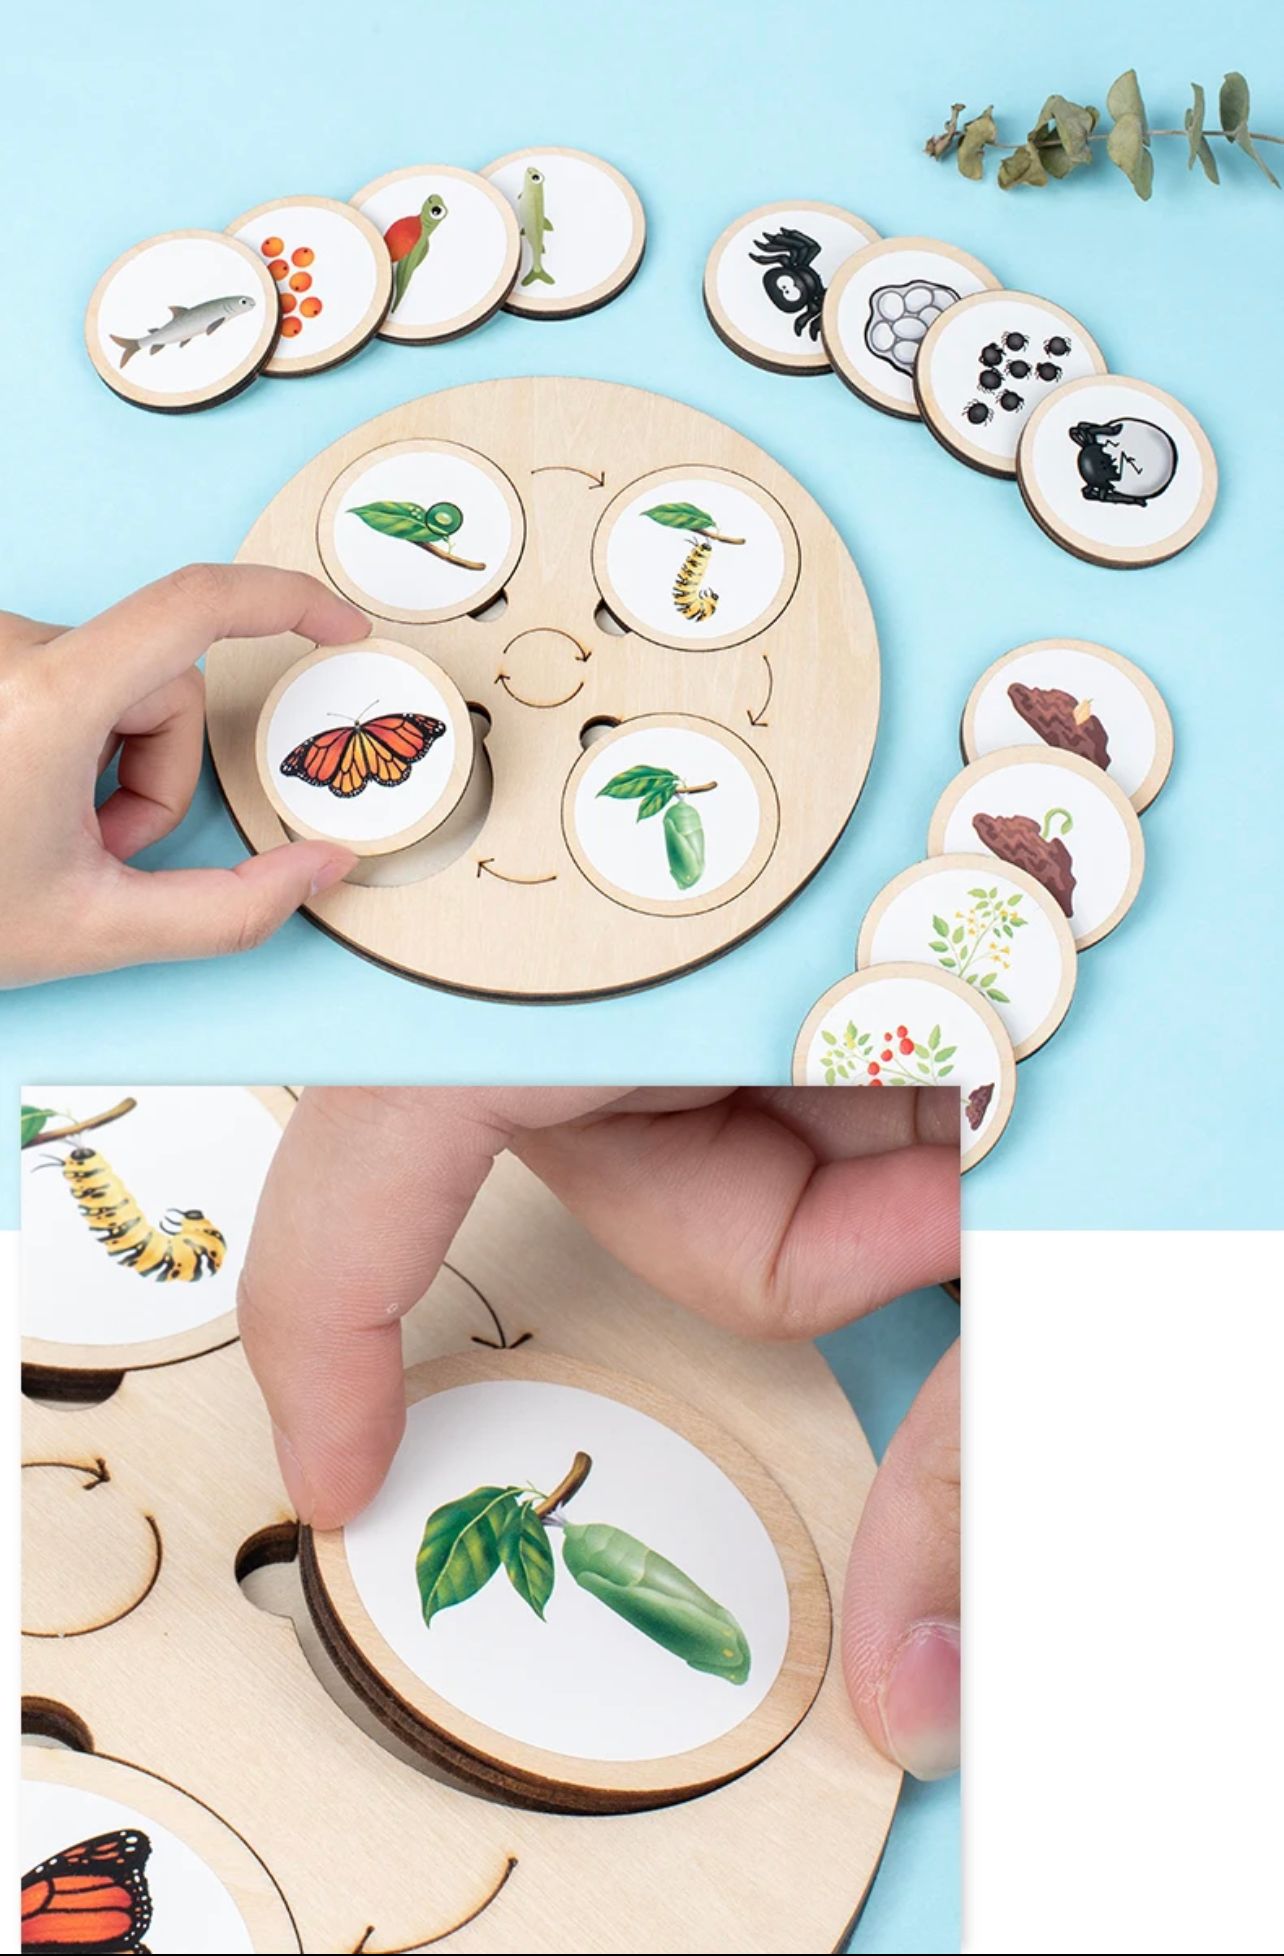 Montessori életciklusok biológia oktató játék